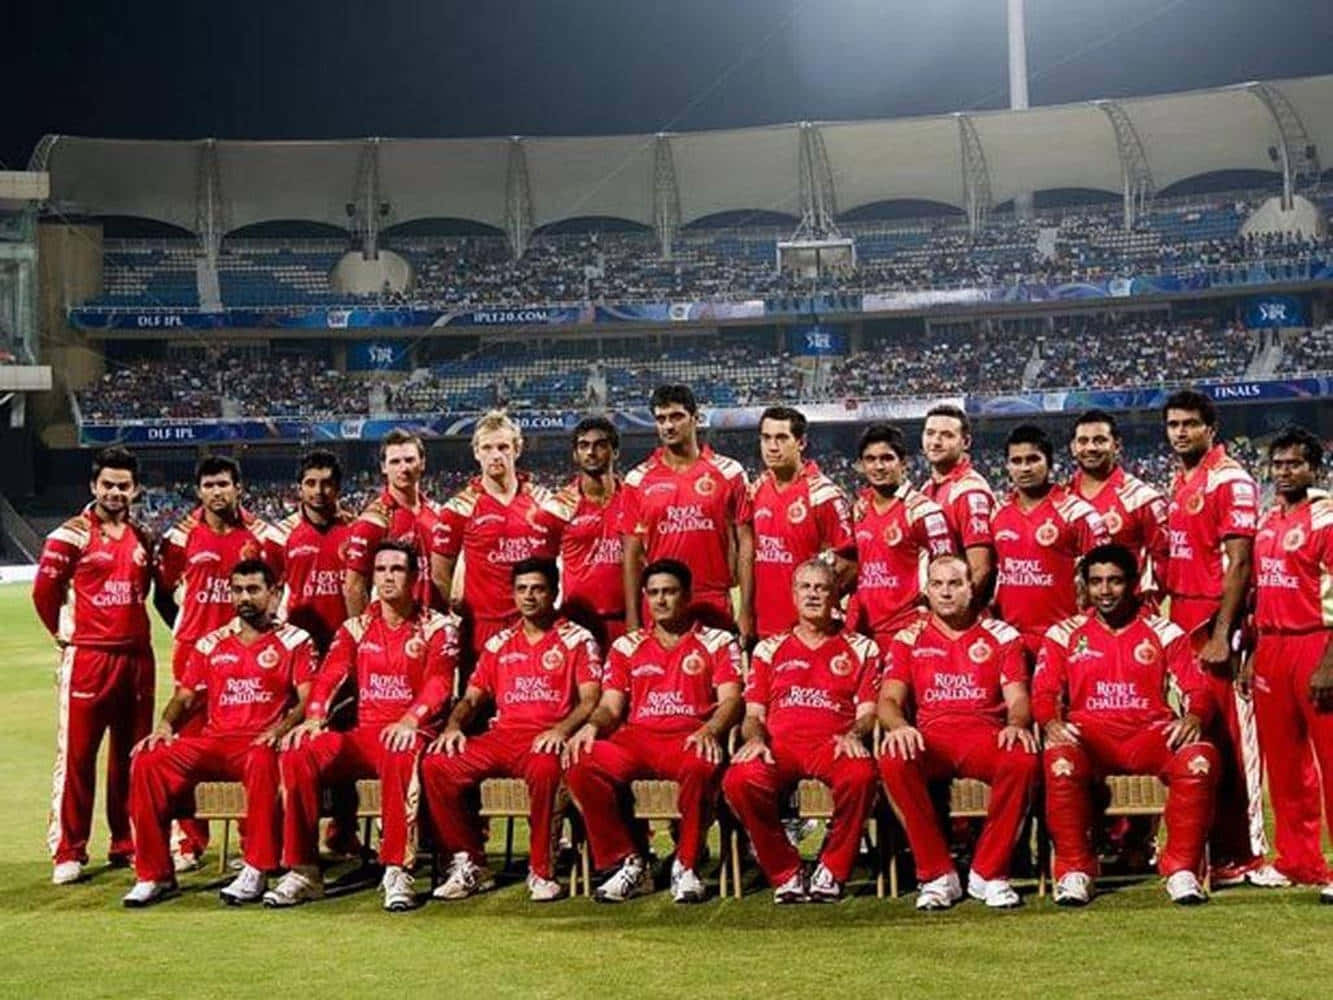 “Royal Challengers Bangalore – India's Premier Team!"